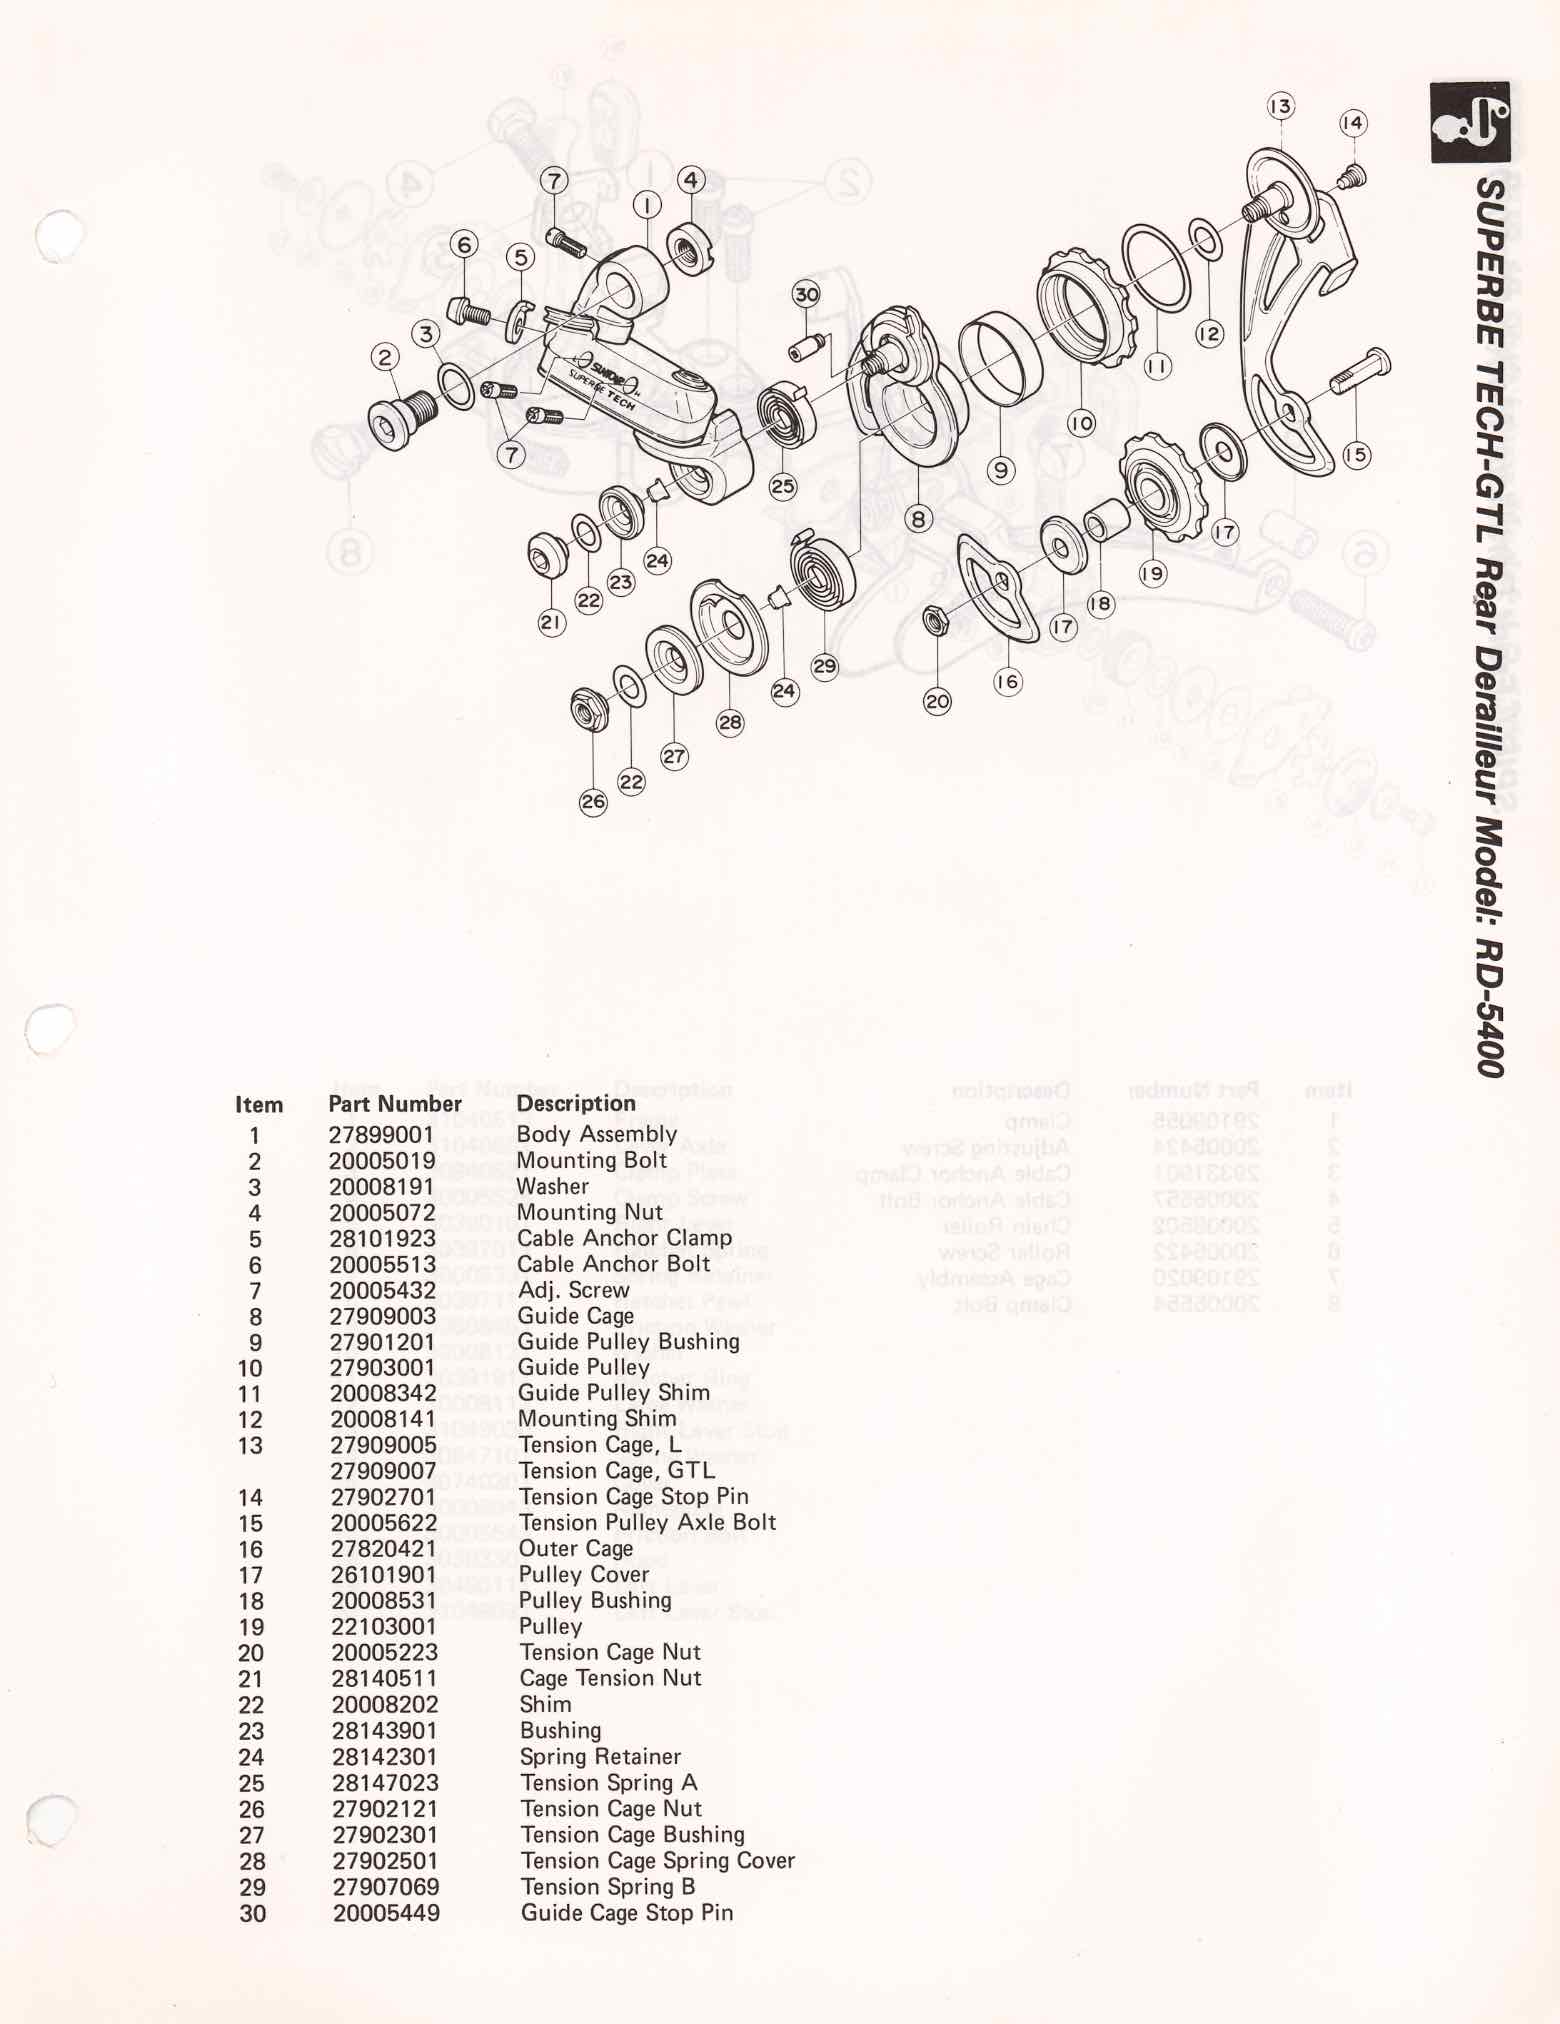 SunTour Small Parts Catalog - 1983? scan 18 main image